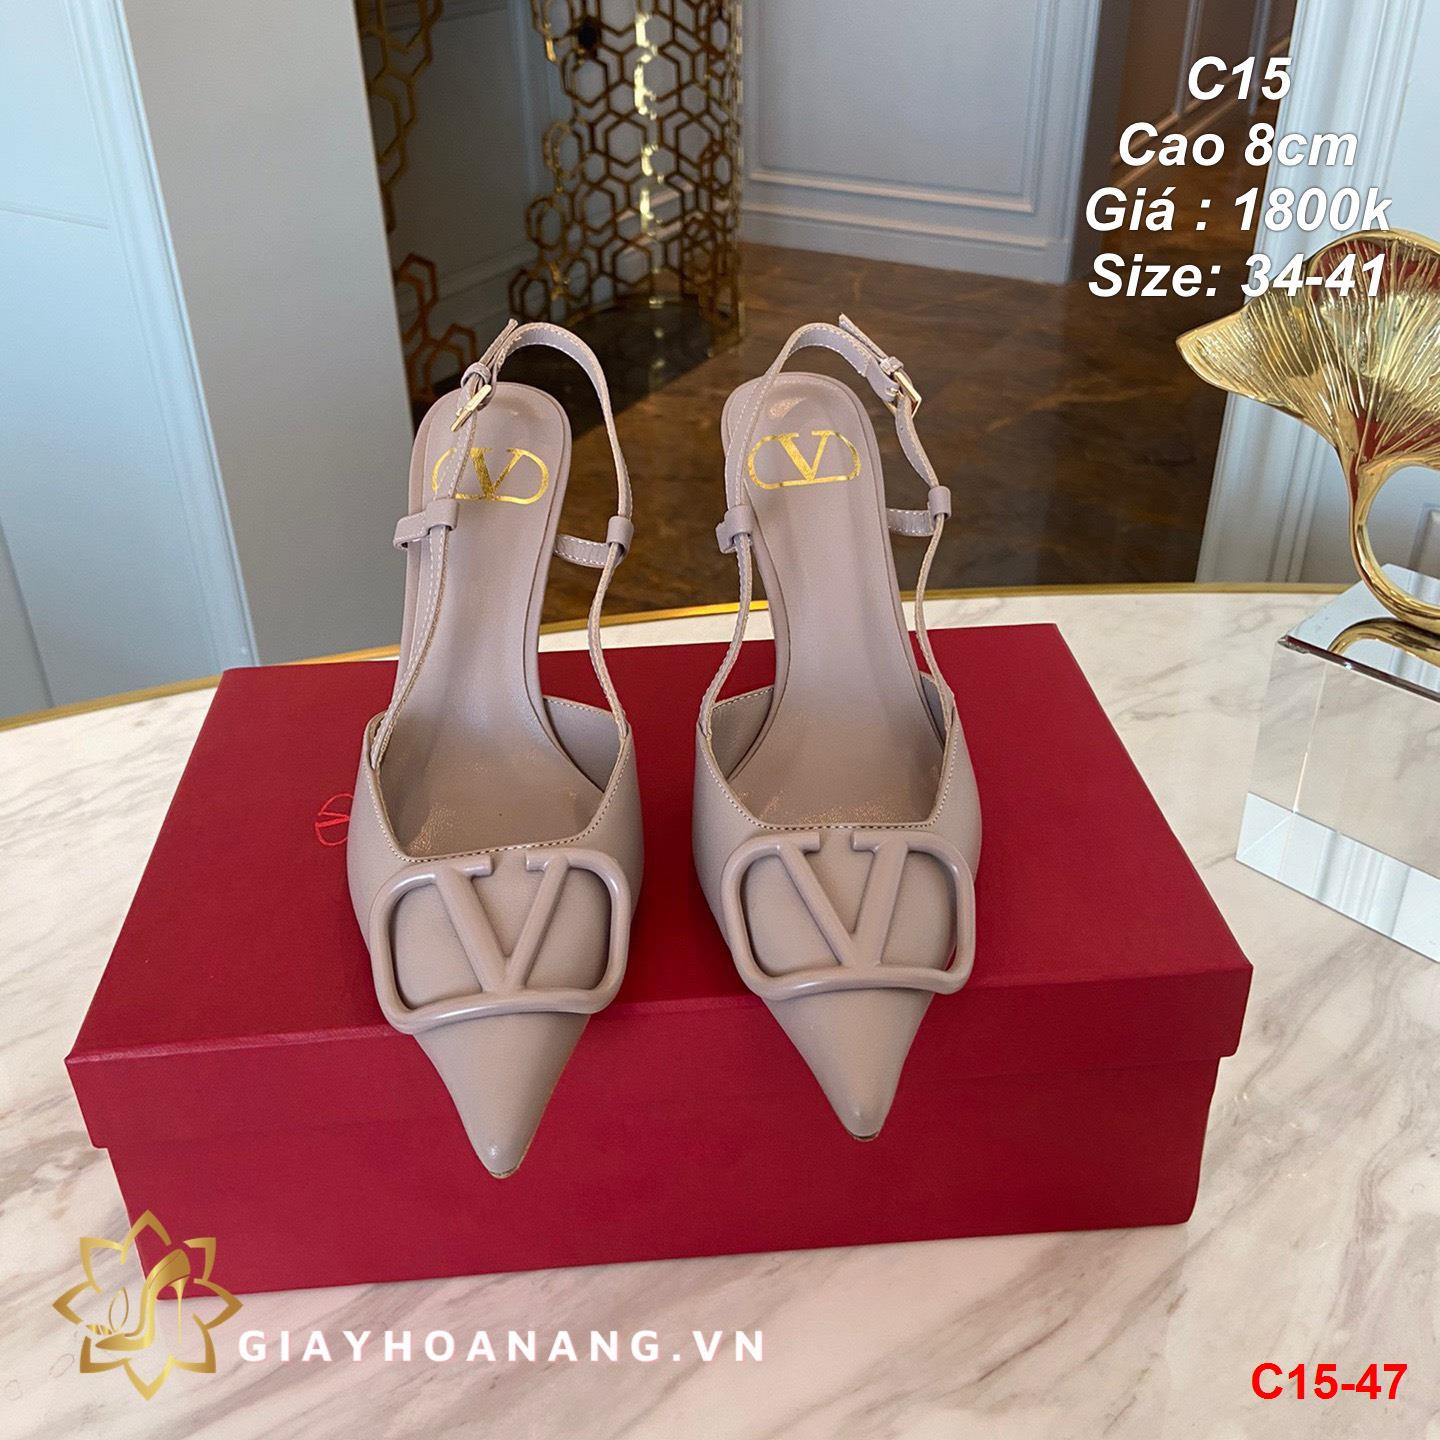 C15-47 Valentino sandal cao 8cm siêu cấp